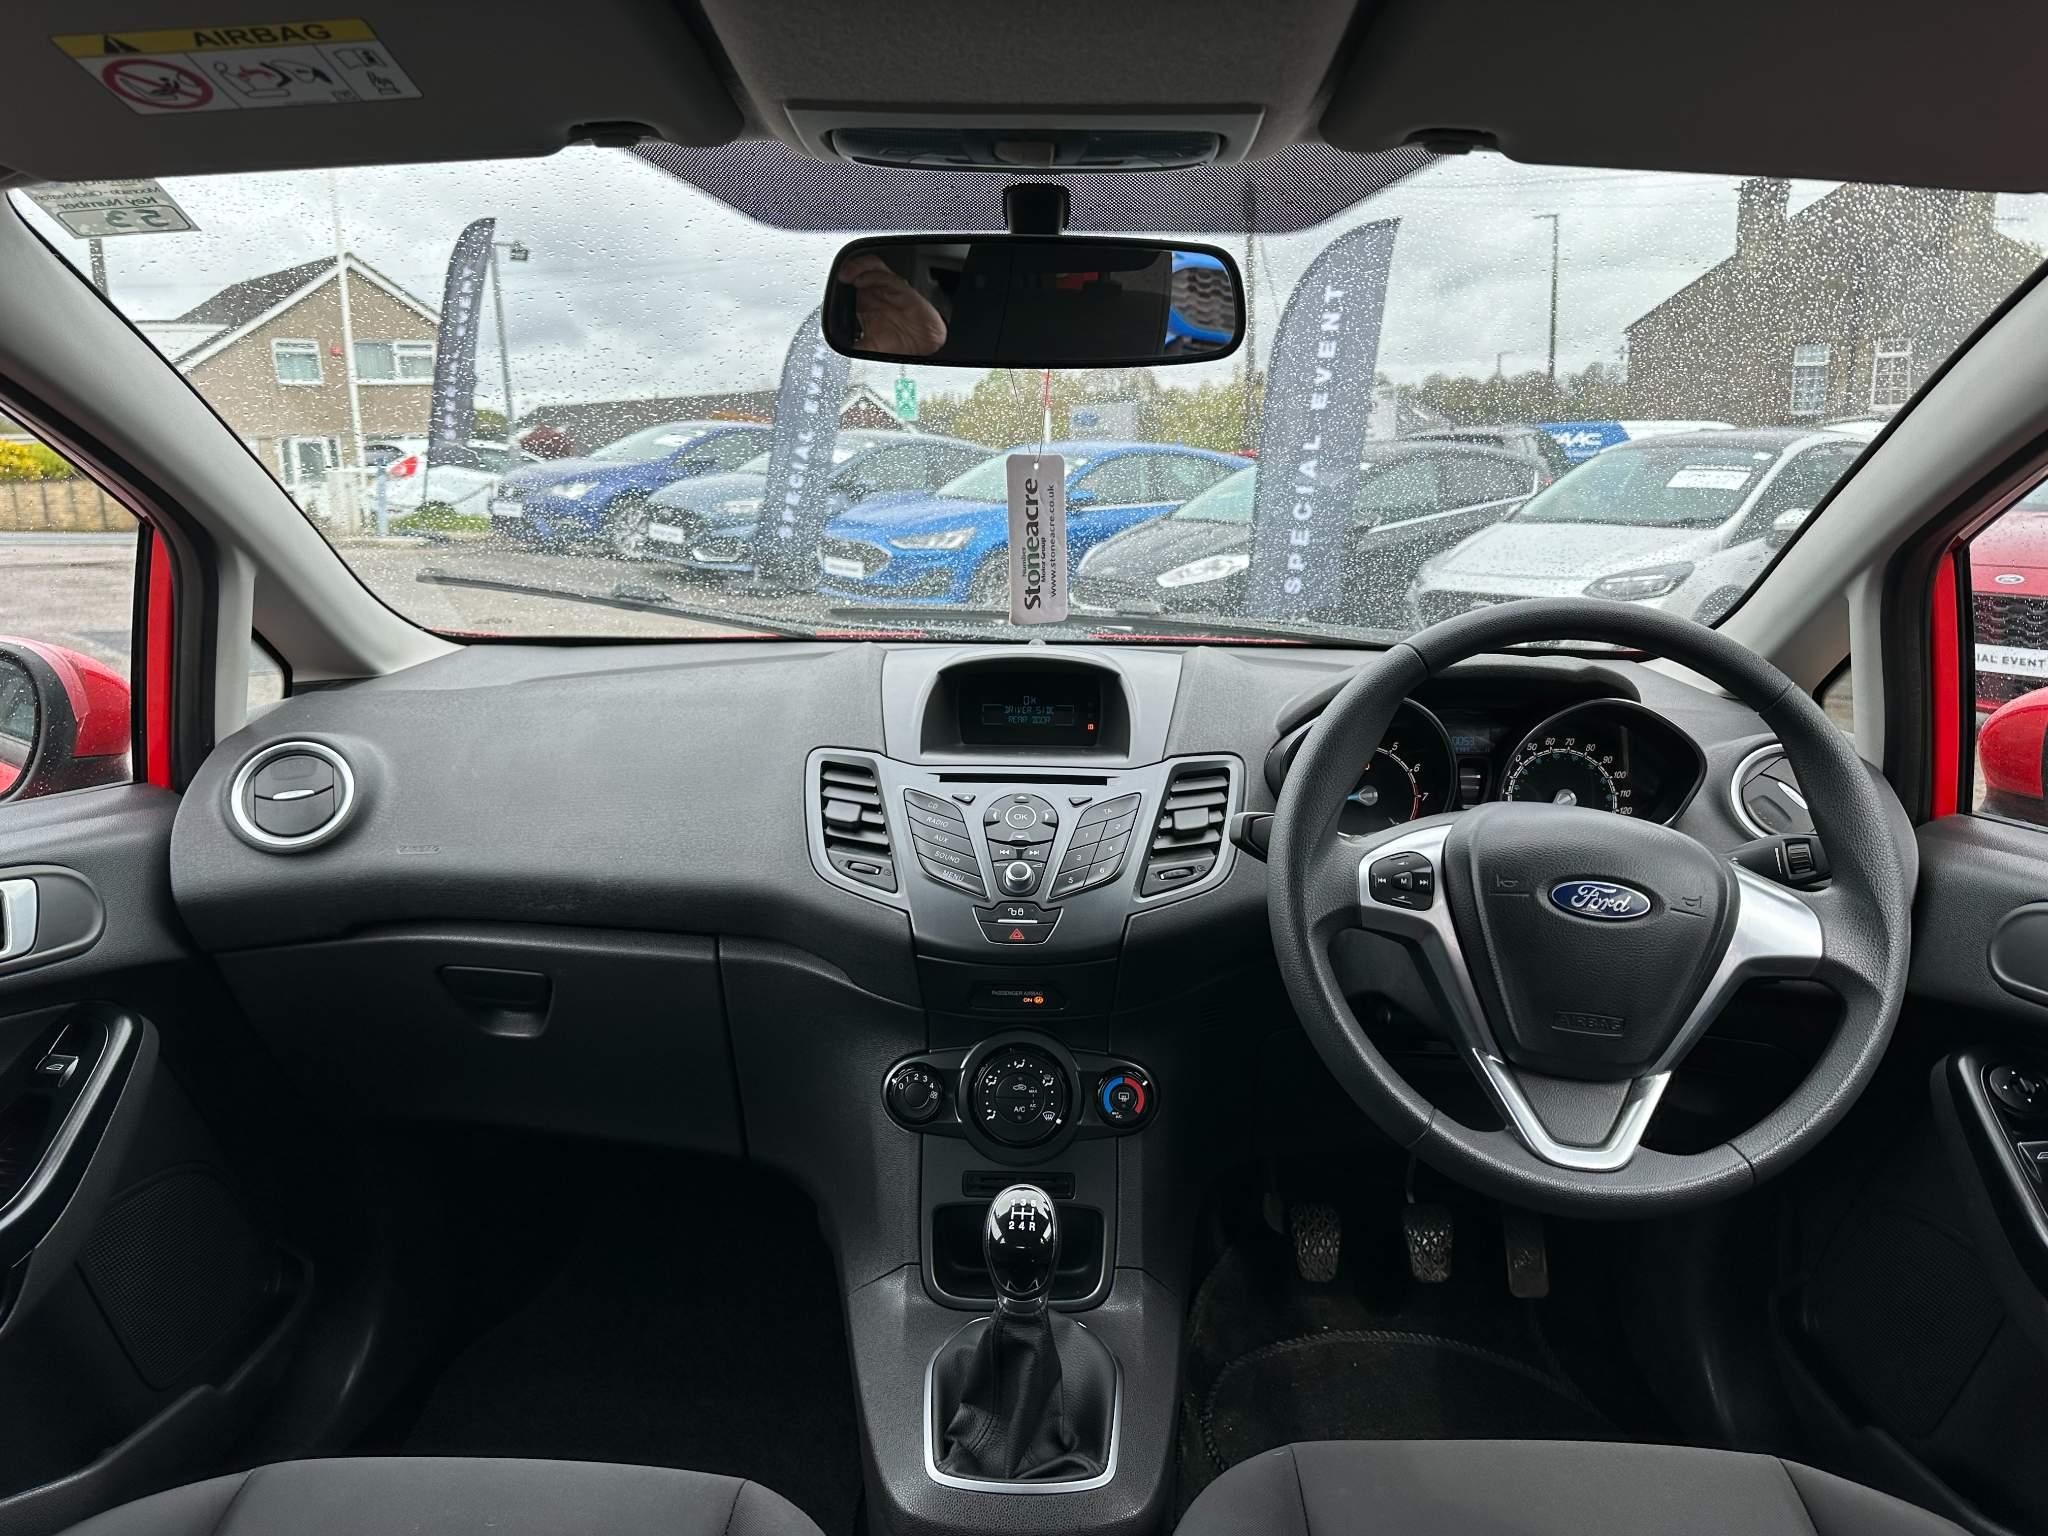 Ford Fiesta 1.25 Style Euro 6 5dr (YB15VTX) image 12